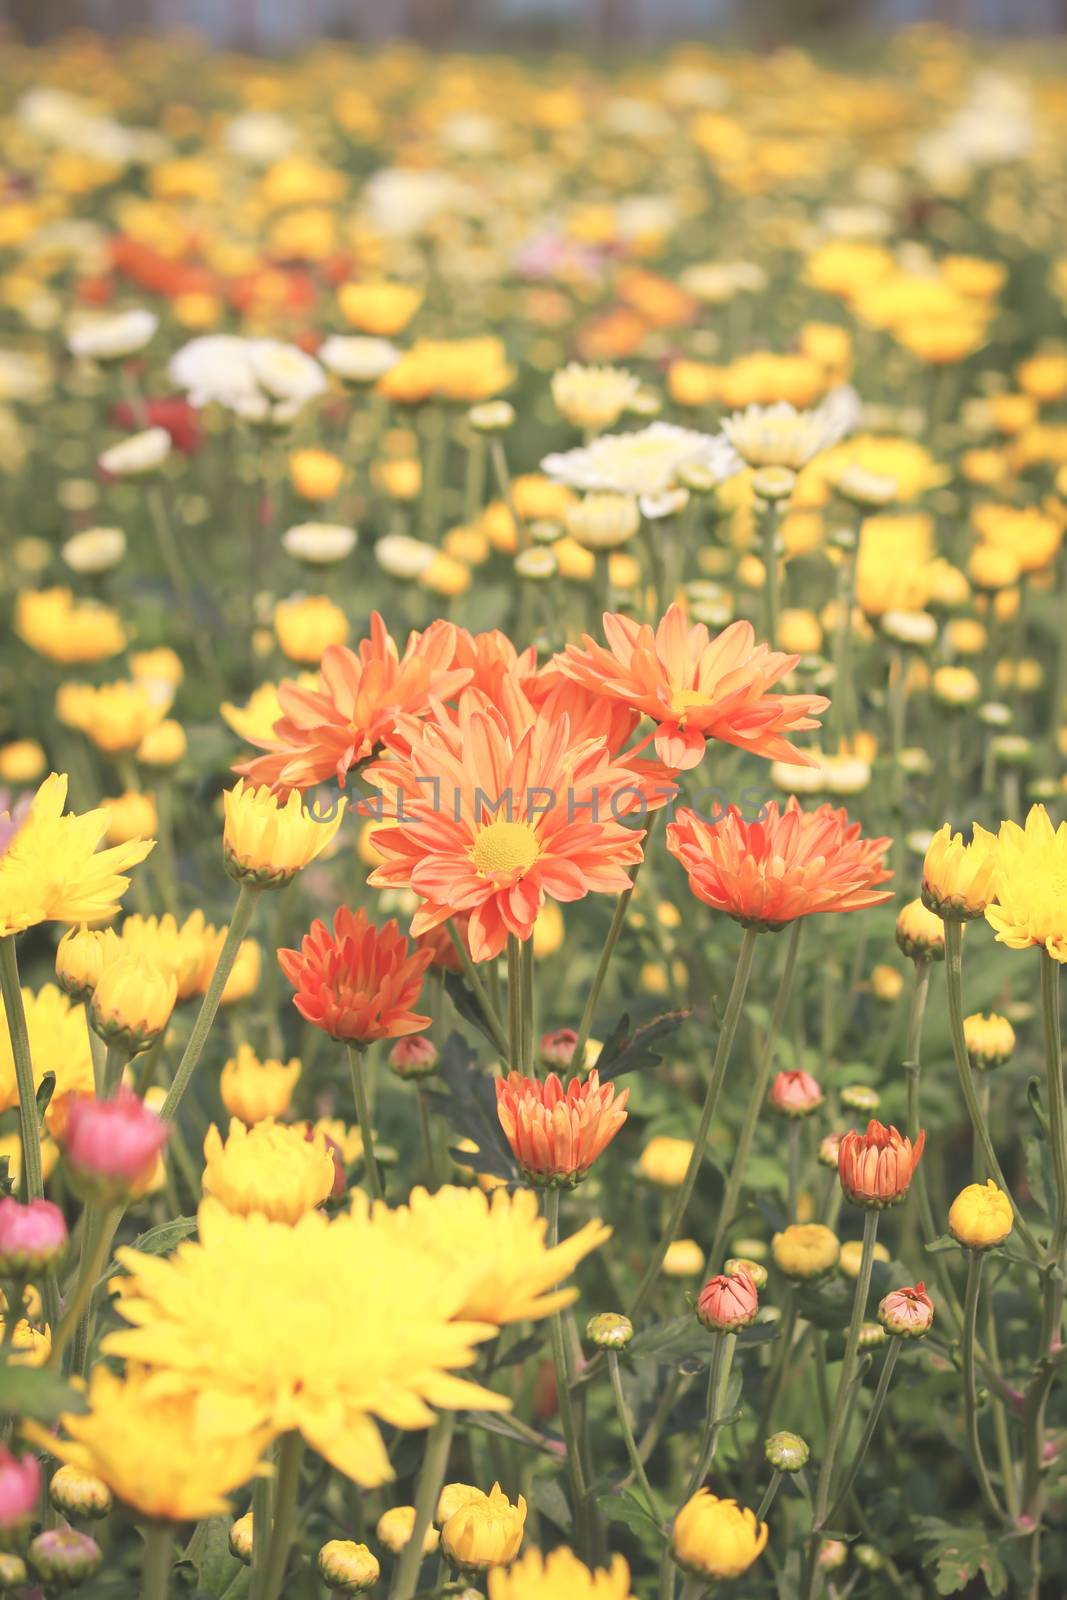 chrysanthemum Flowers in garden by powerbeephoto